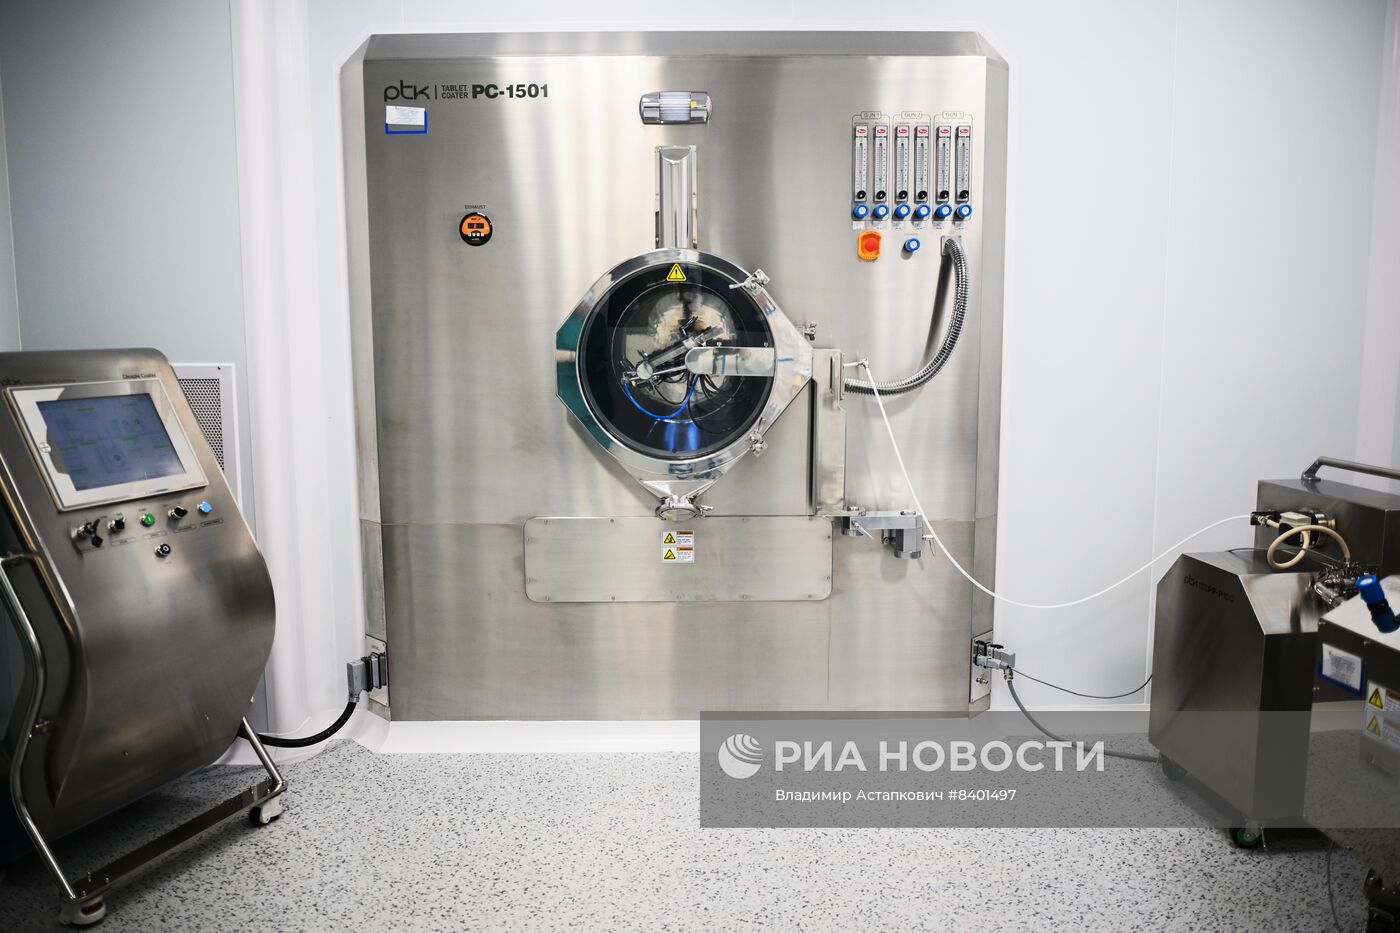 Производство фармацевтических субстанций запустили на заводе "Биохимик" в Саранске